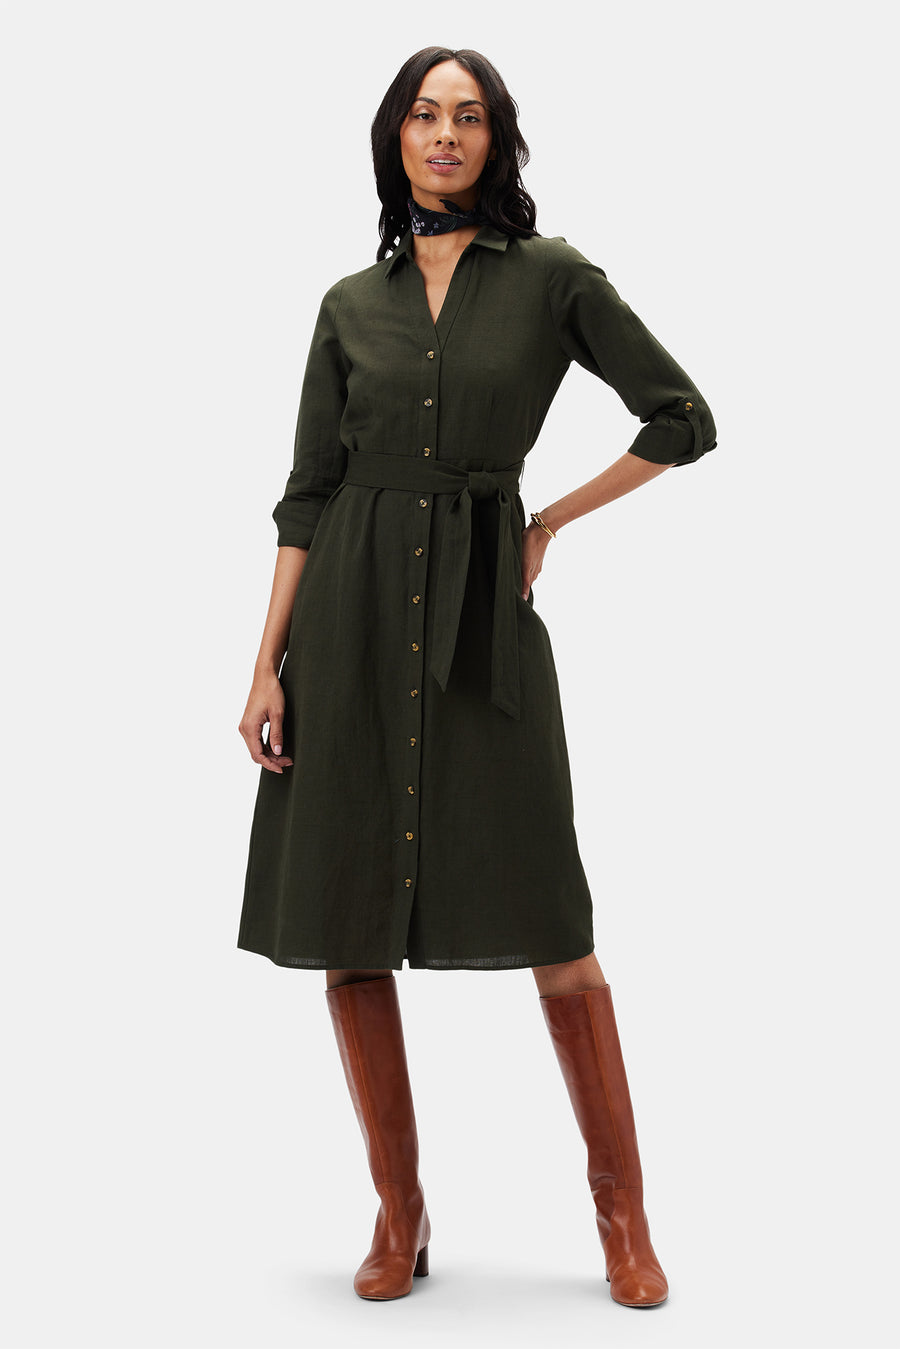 Joyce Cotton Linen Dress - Olive Green